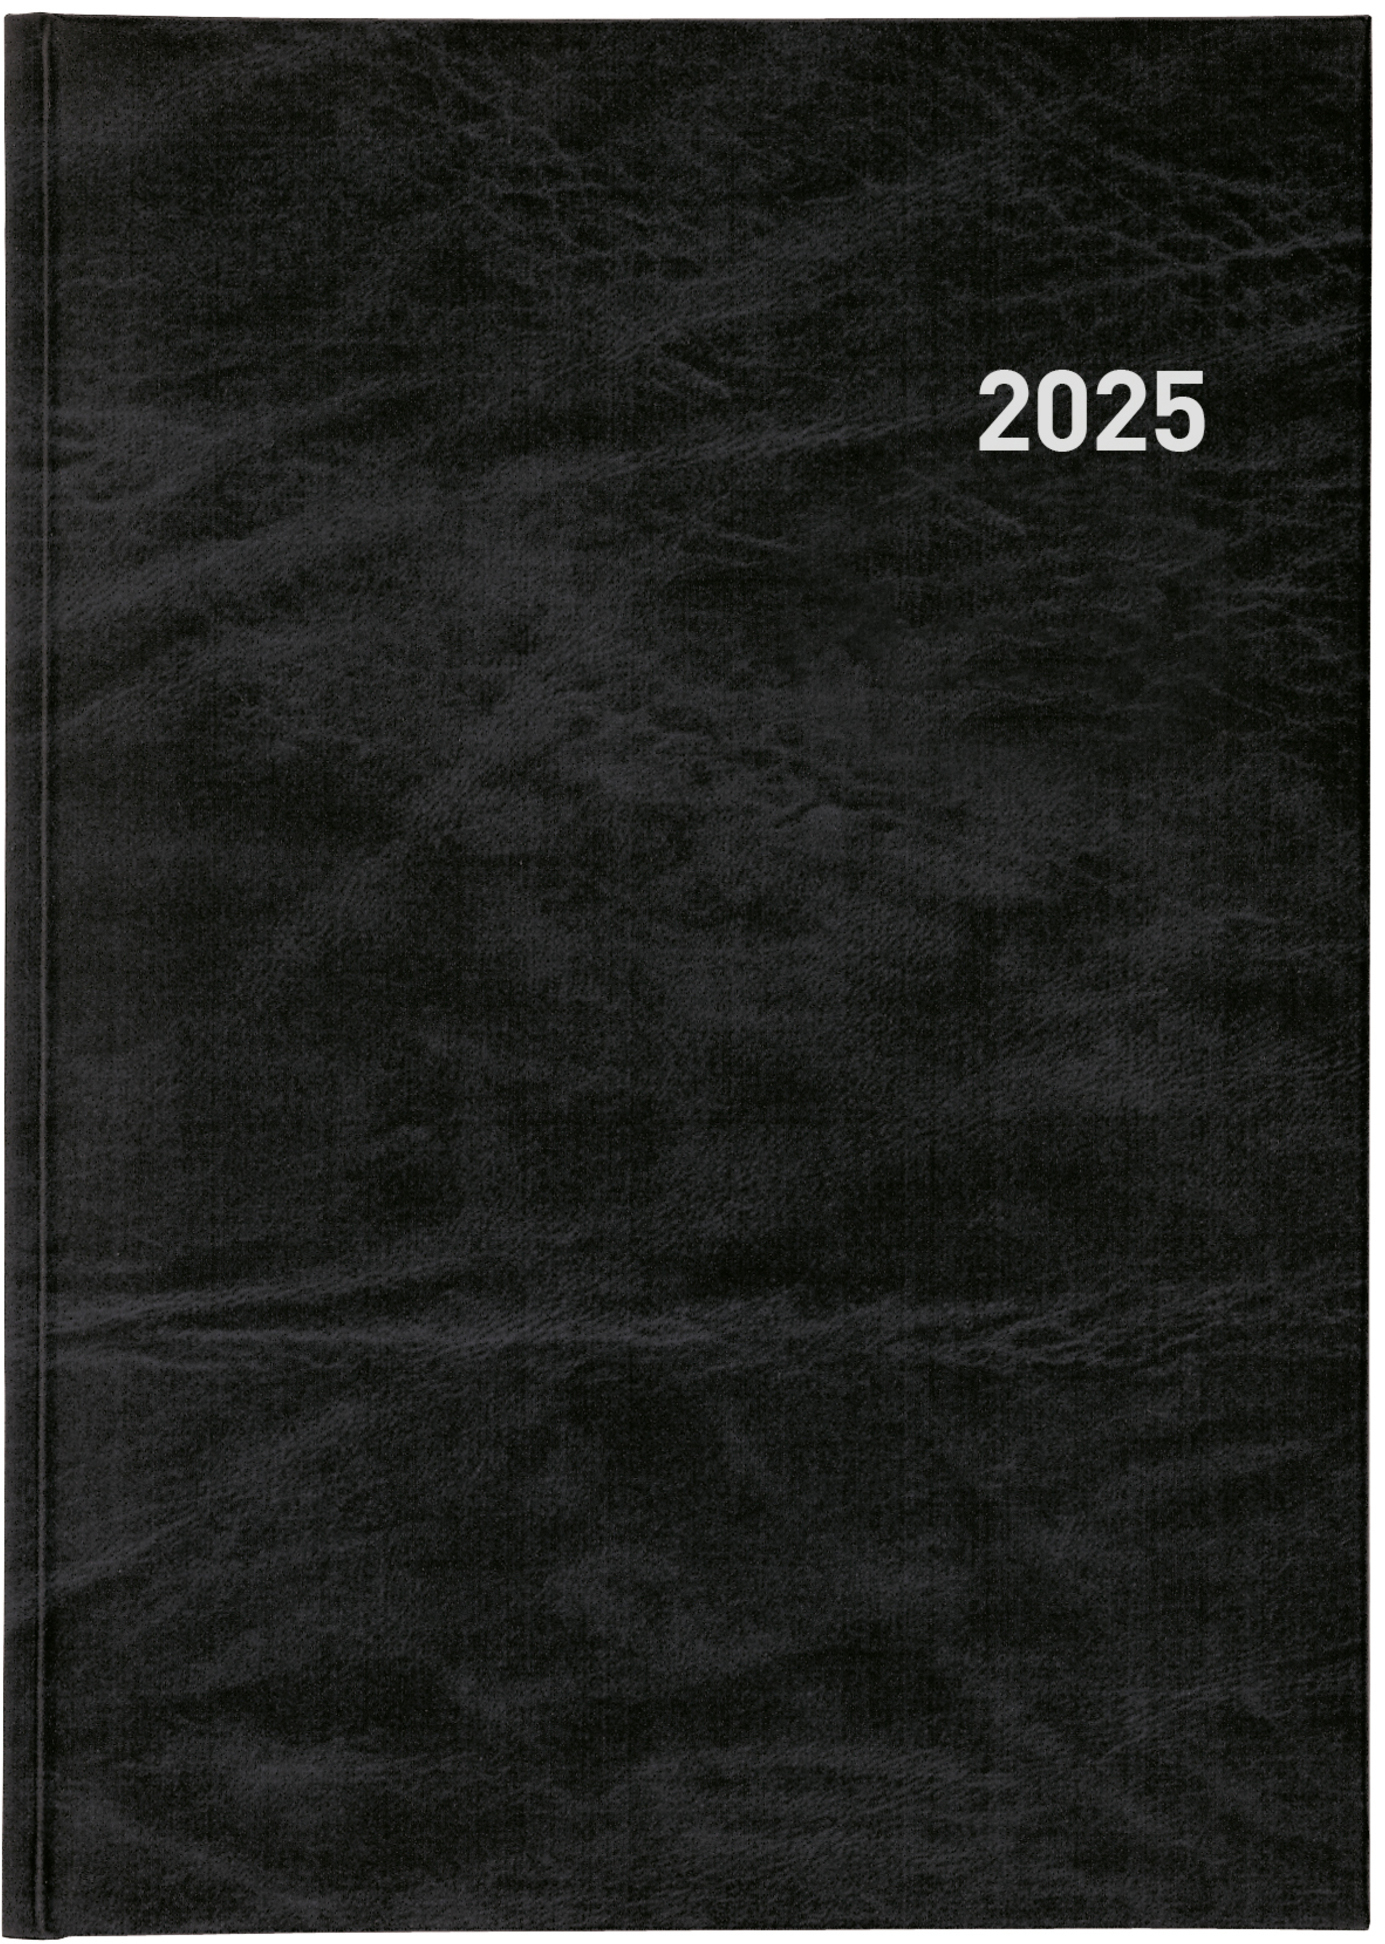 BIELLA Agenda Registra 7 2025 809507020025 1S/2P noir ML 17.2x24cm